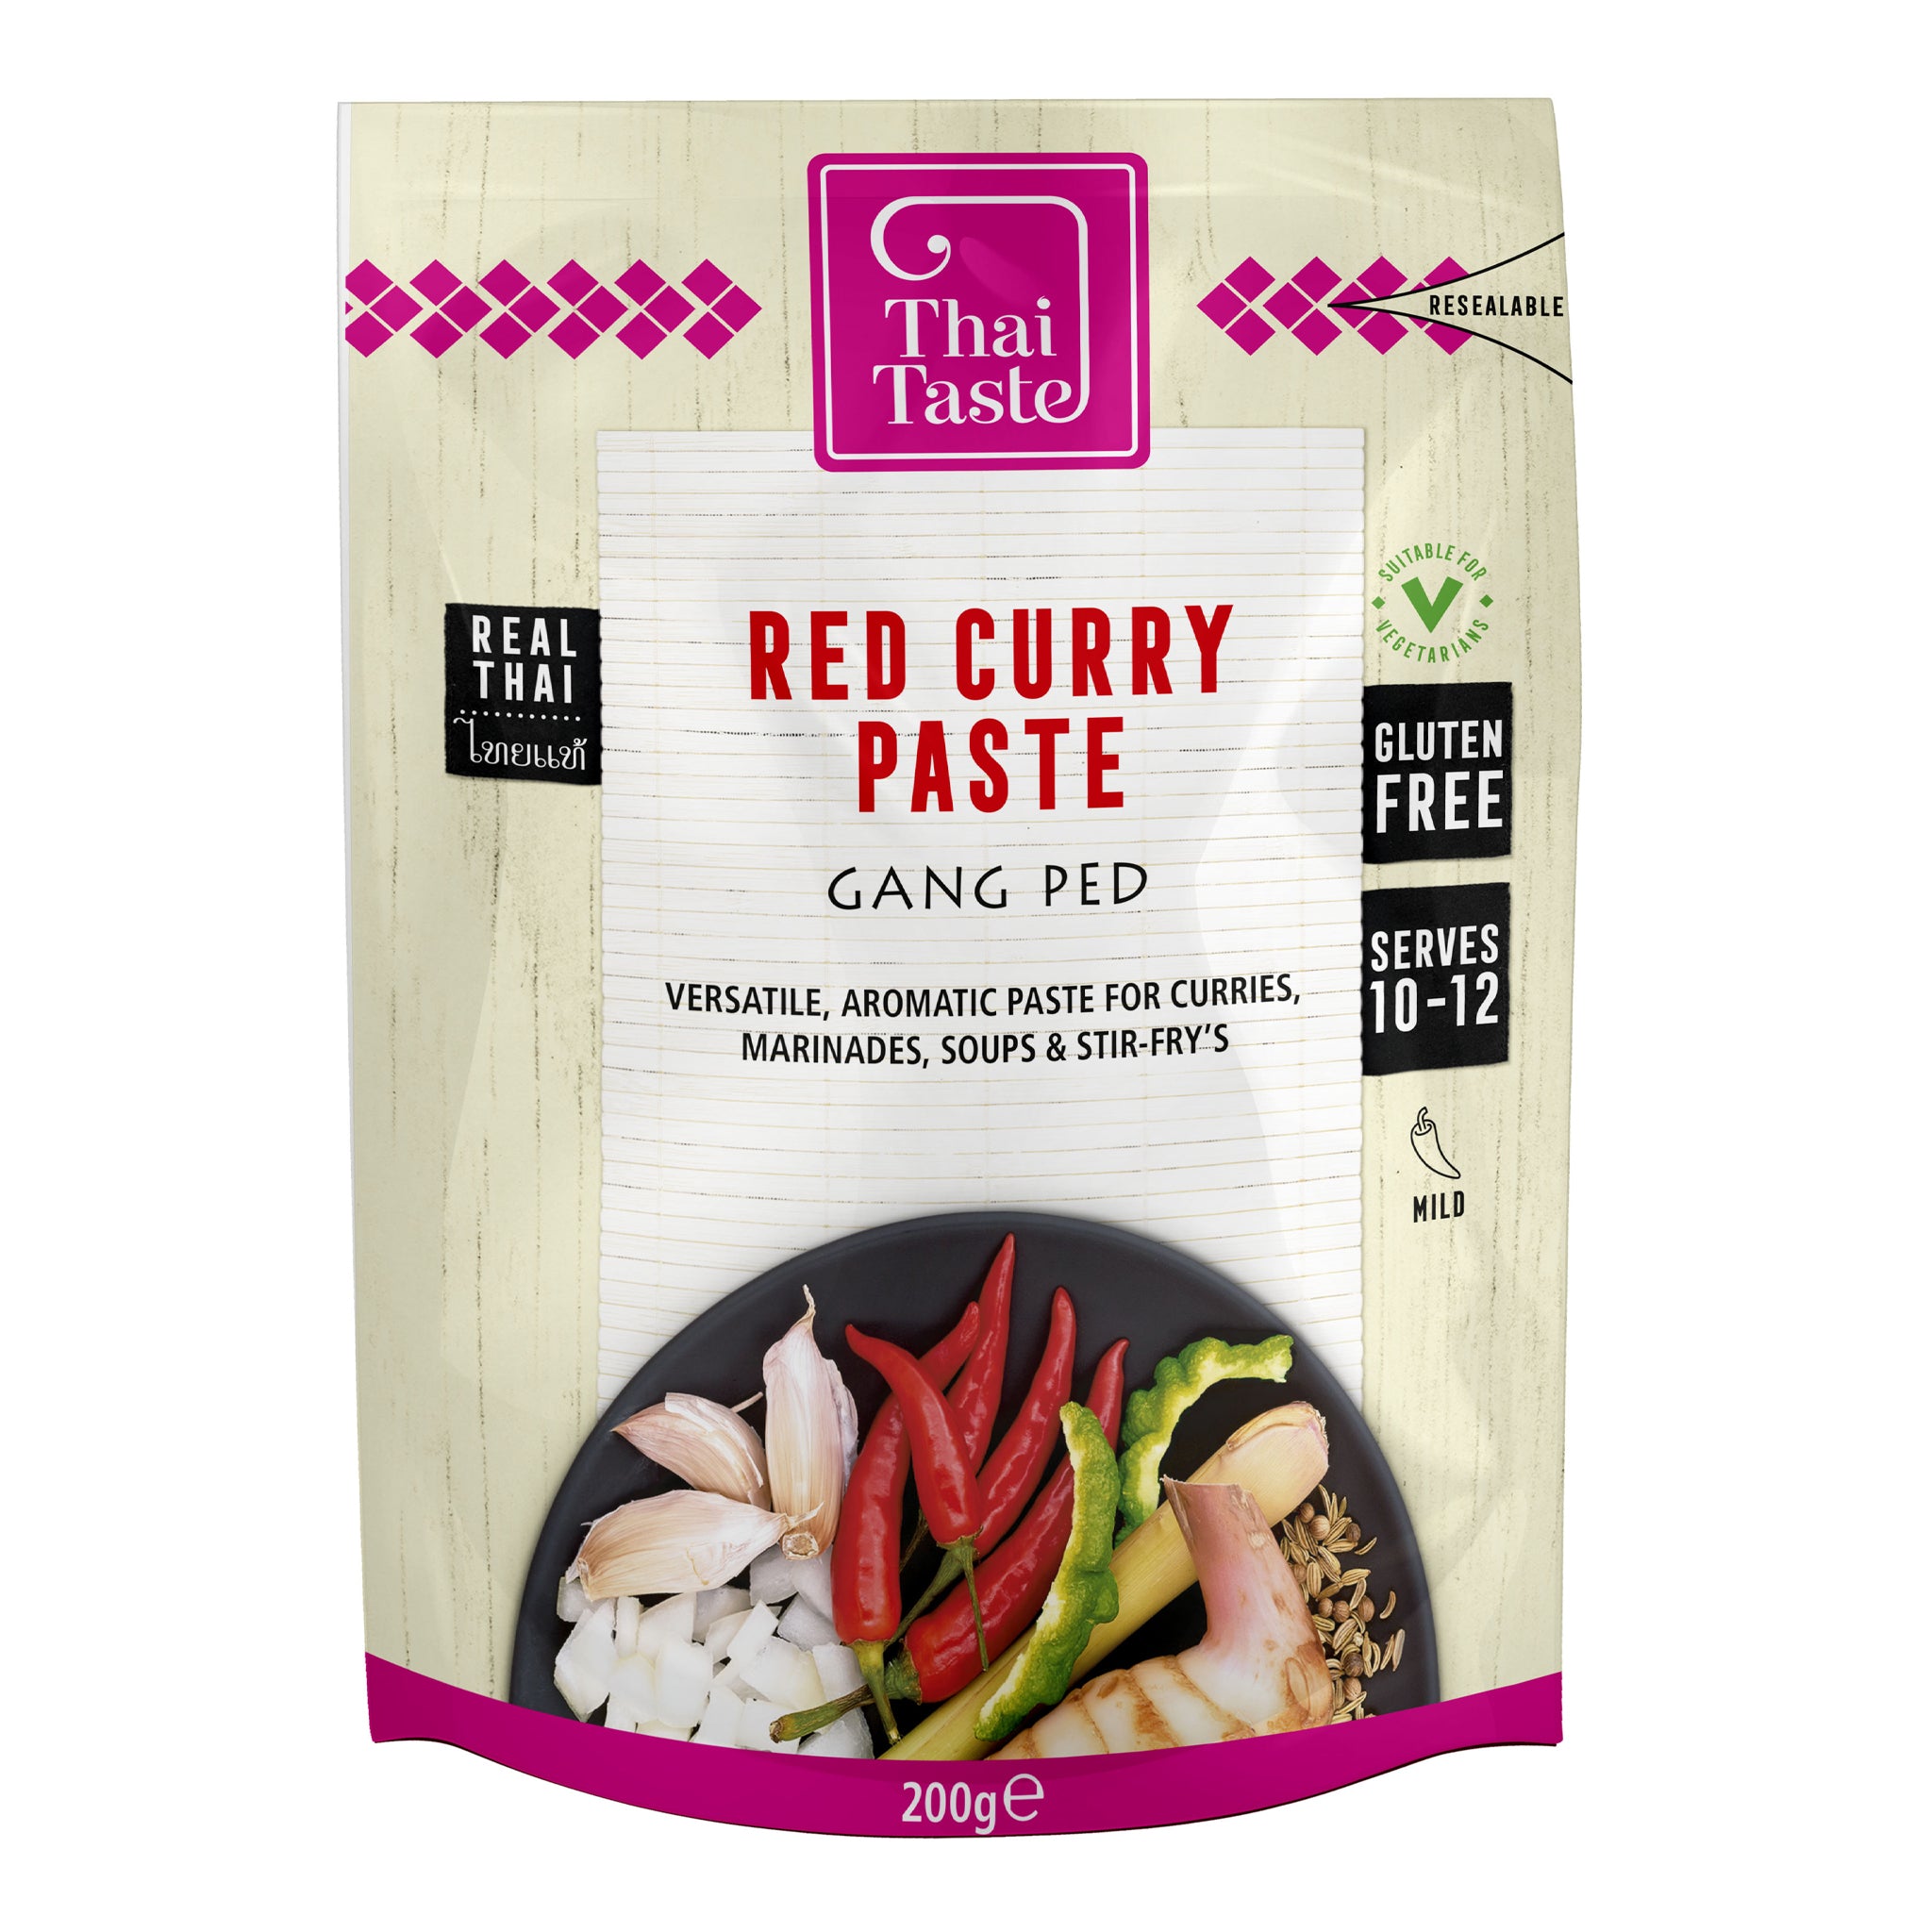 Thai Red Curry Paste (Gang Ped) 200g by Thai Taste